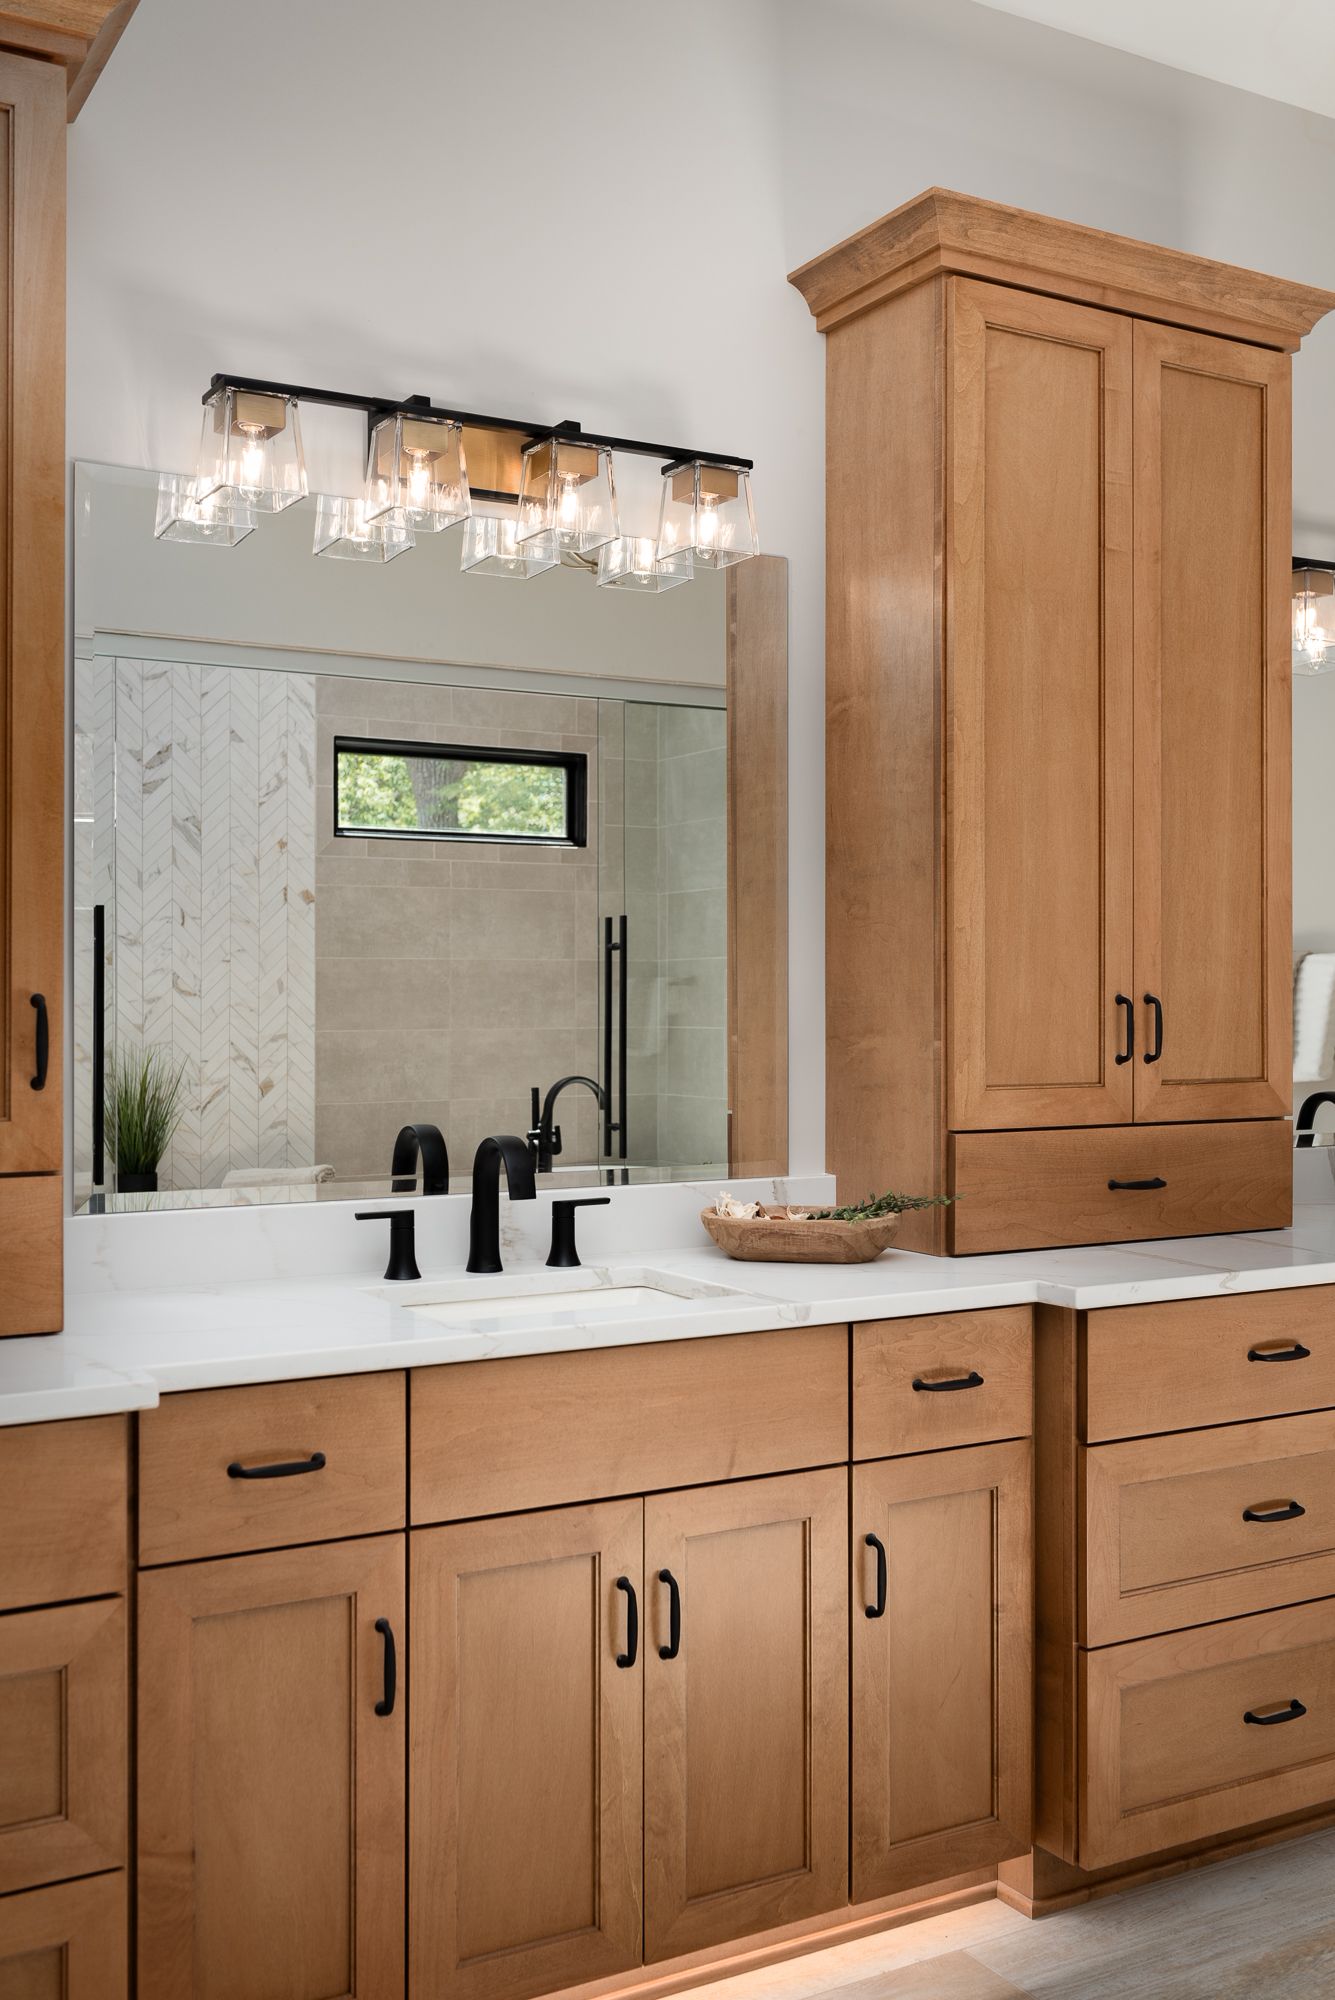 Wood master bathroom vanity with black hardware and vanity lighting